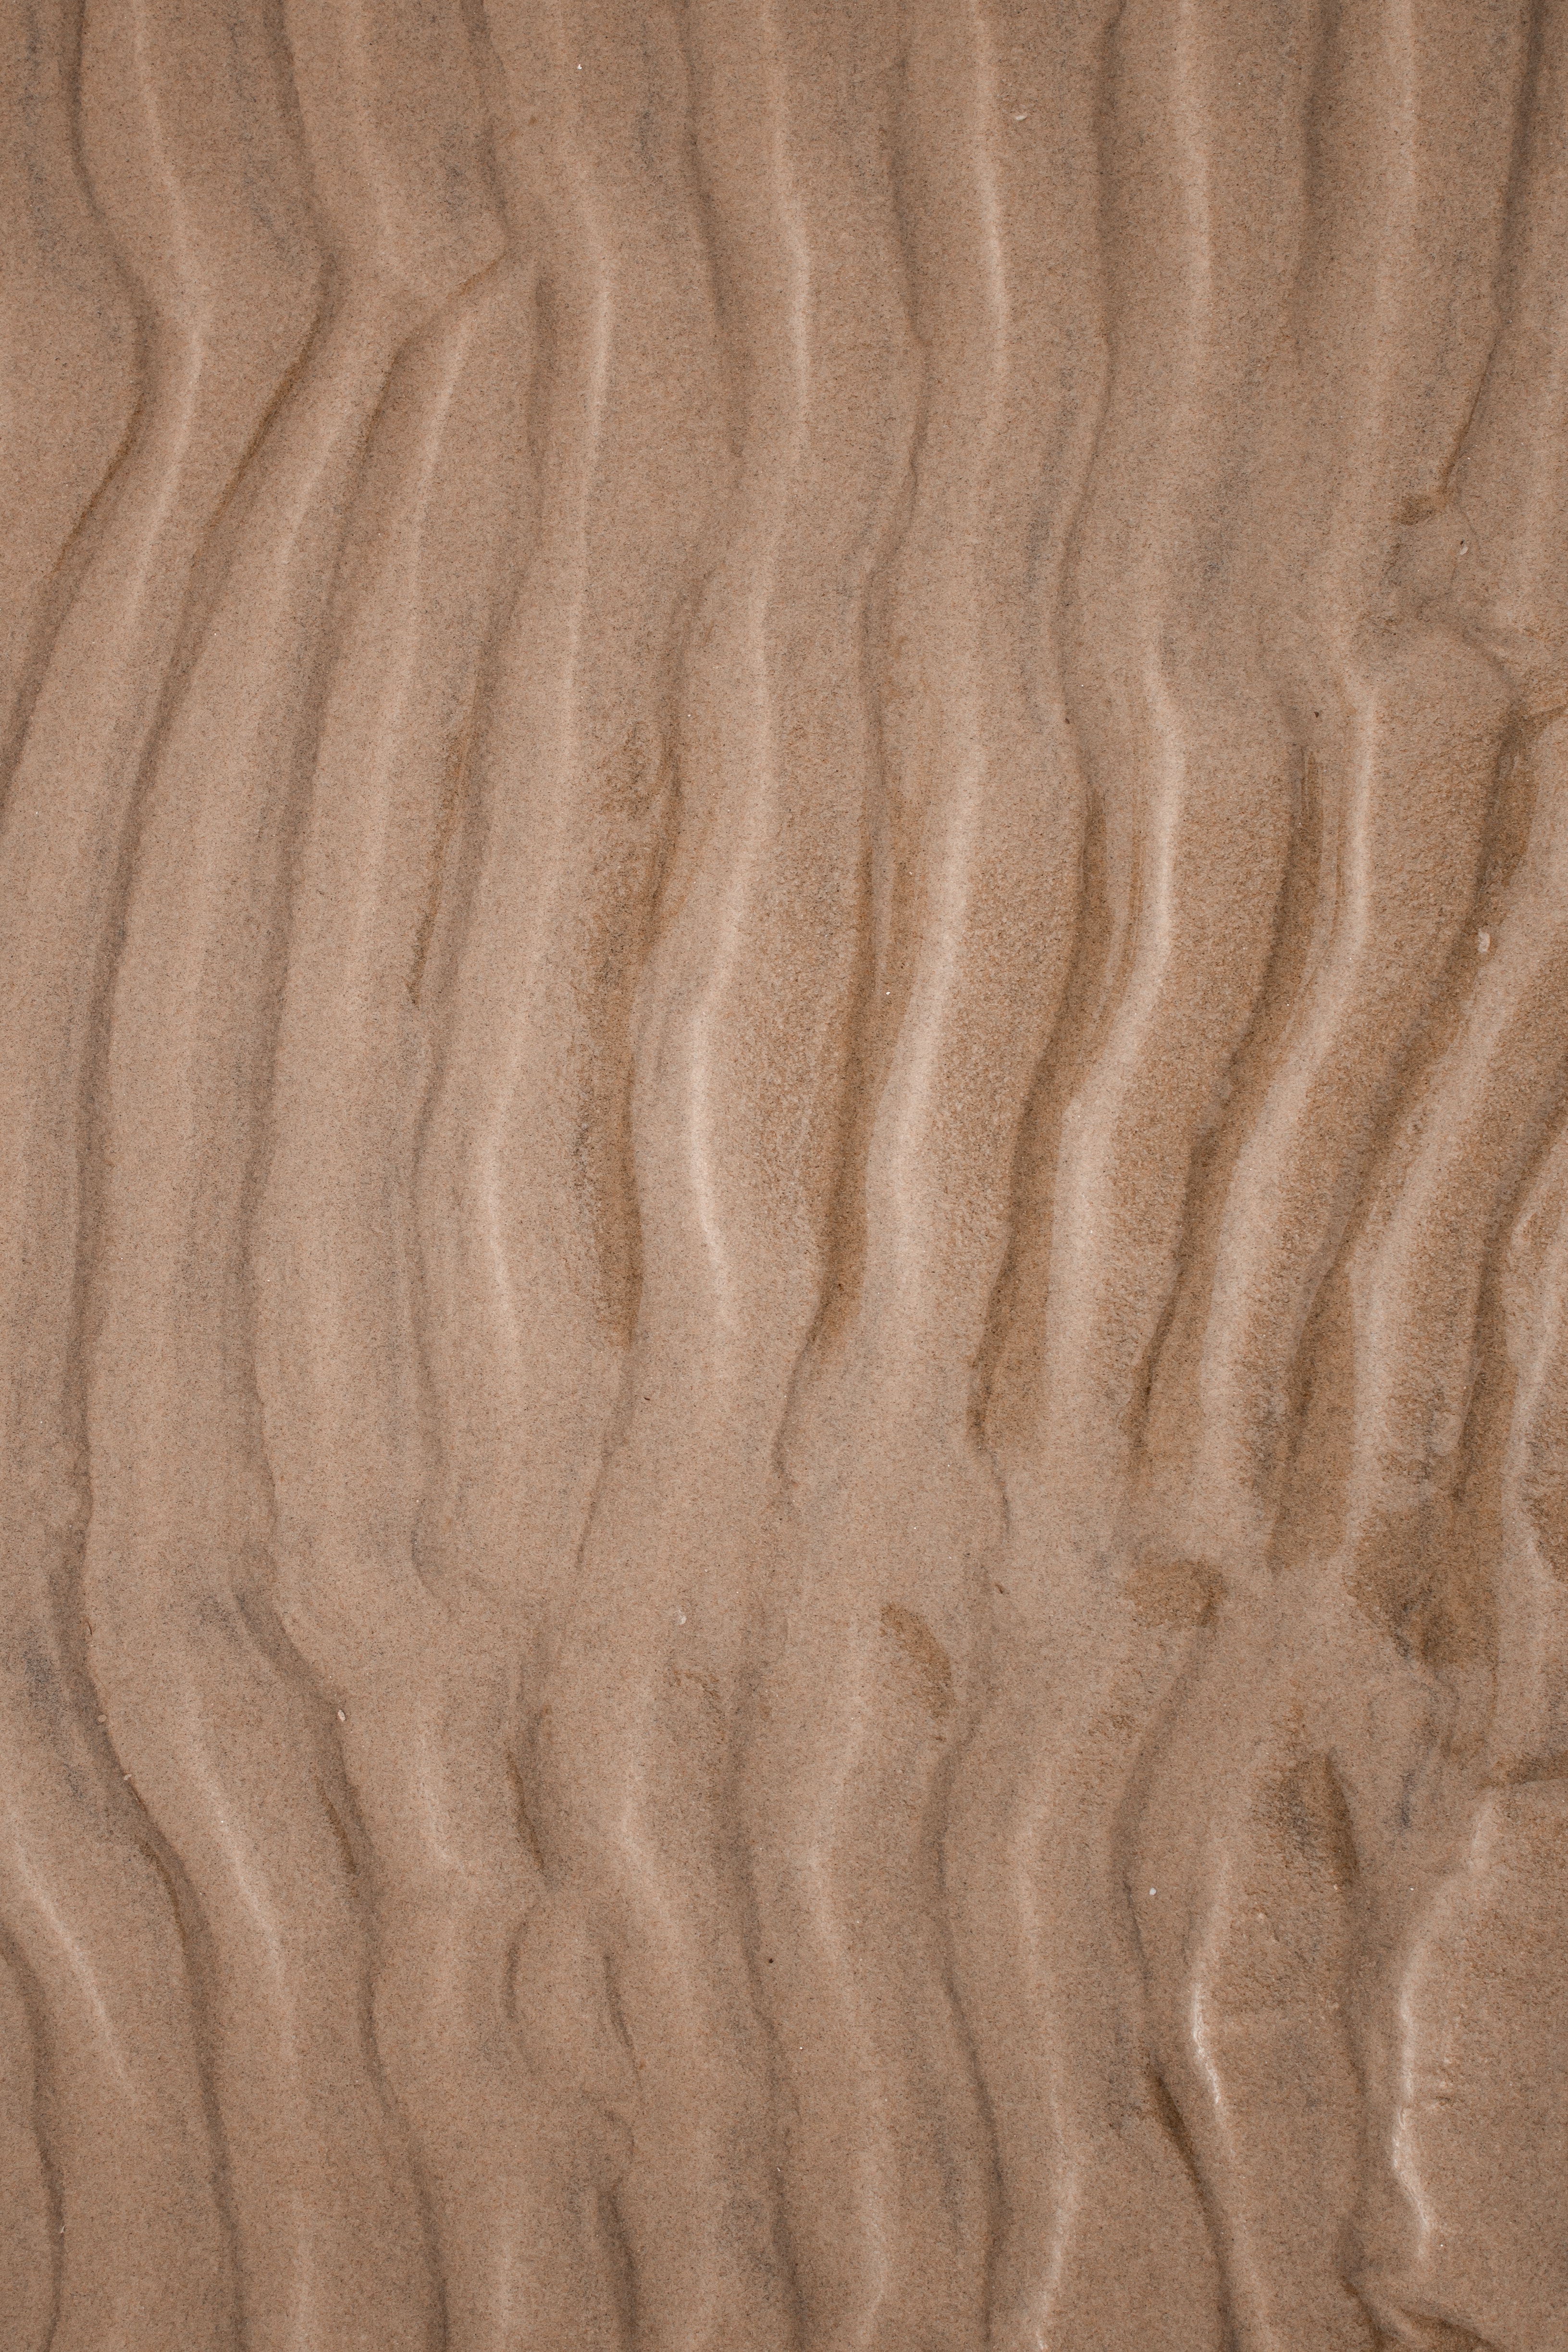 Windows Backgrounds sand, texture, lines, textures, wavy, stripes, streaks